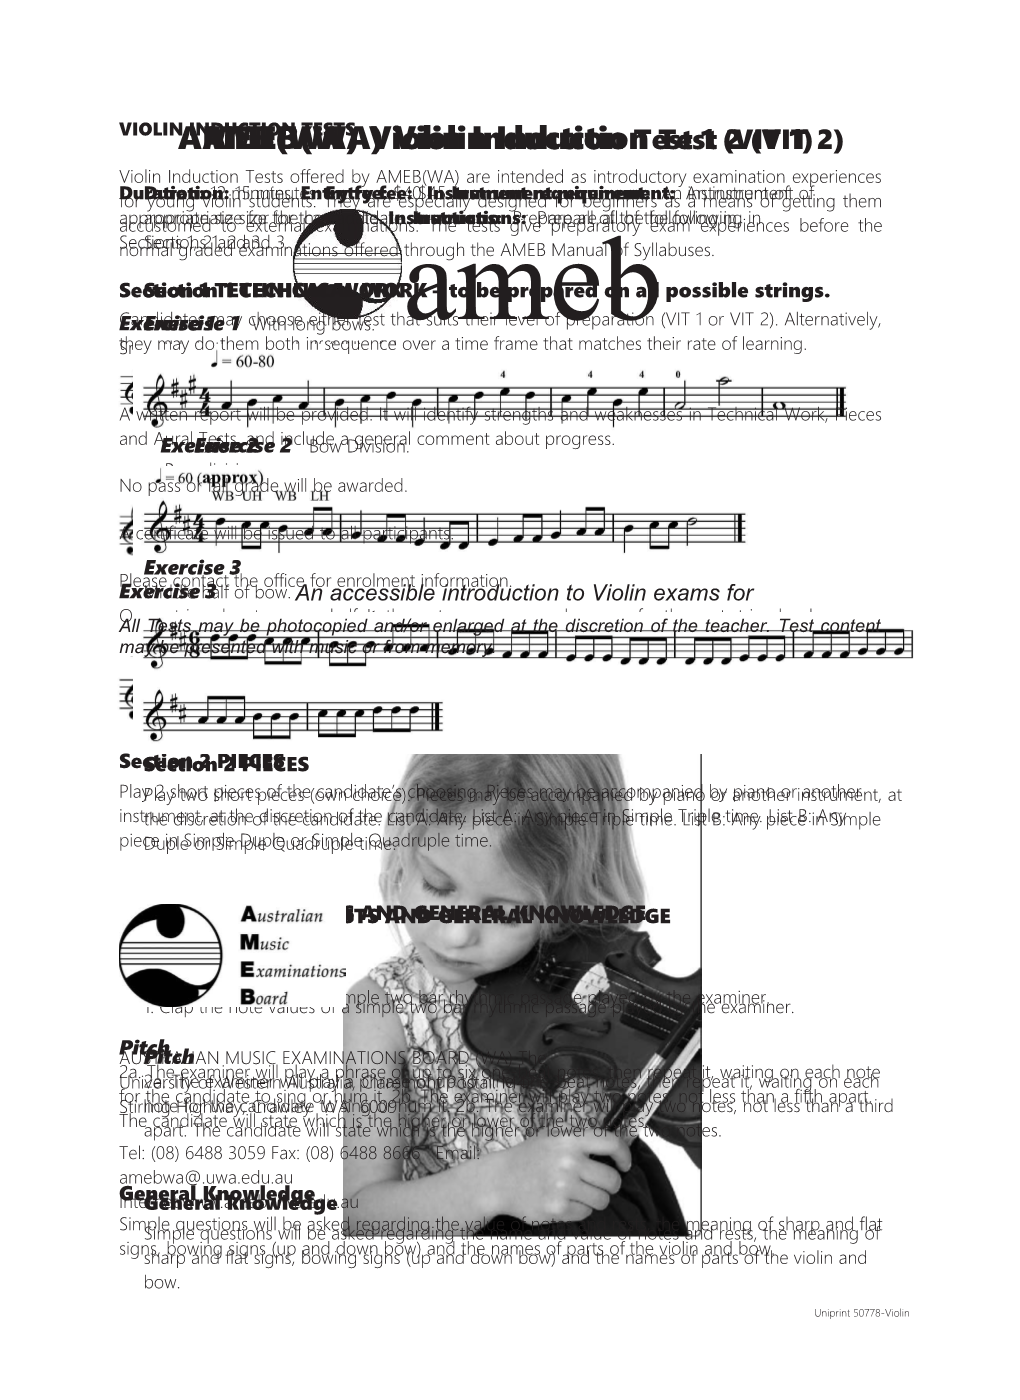 AMEB(WA) Violin Induction Test 1 (VIT 1)